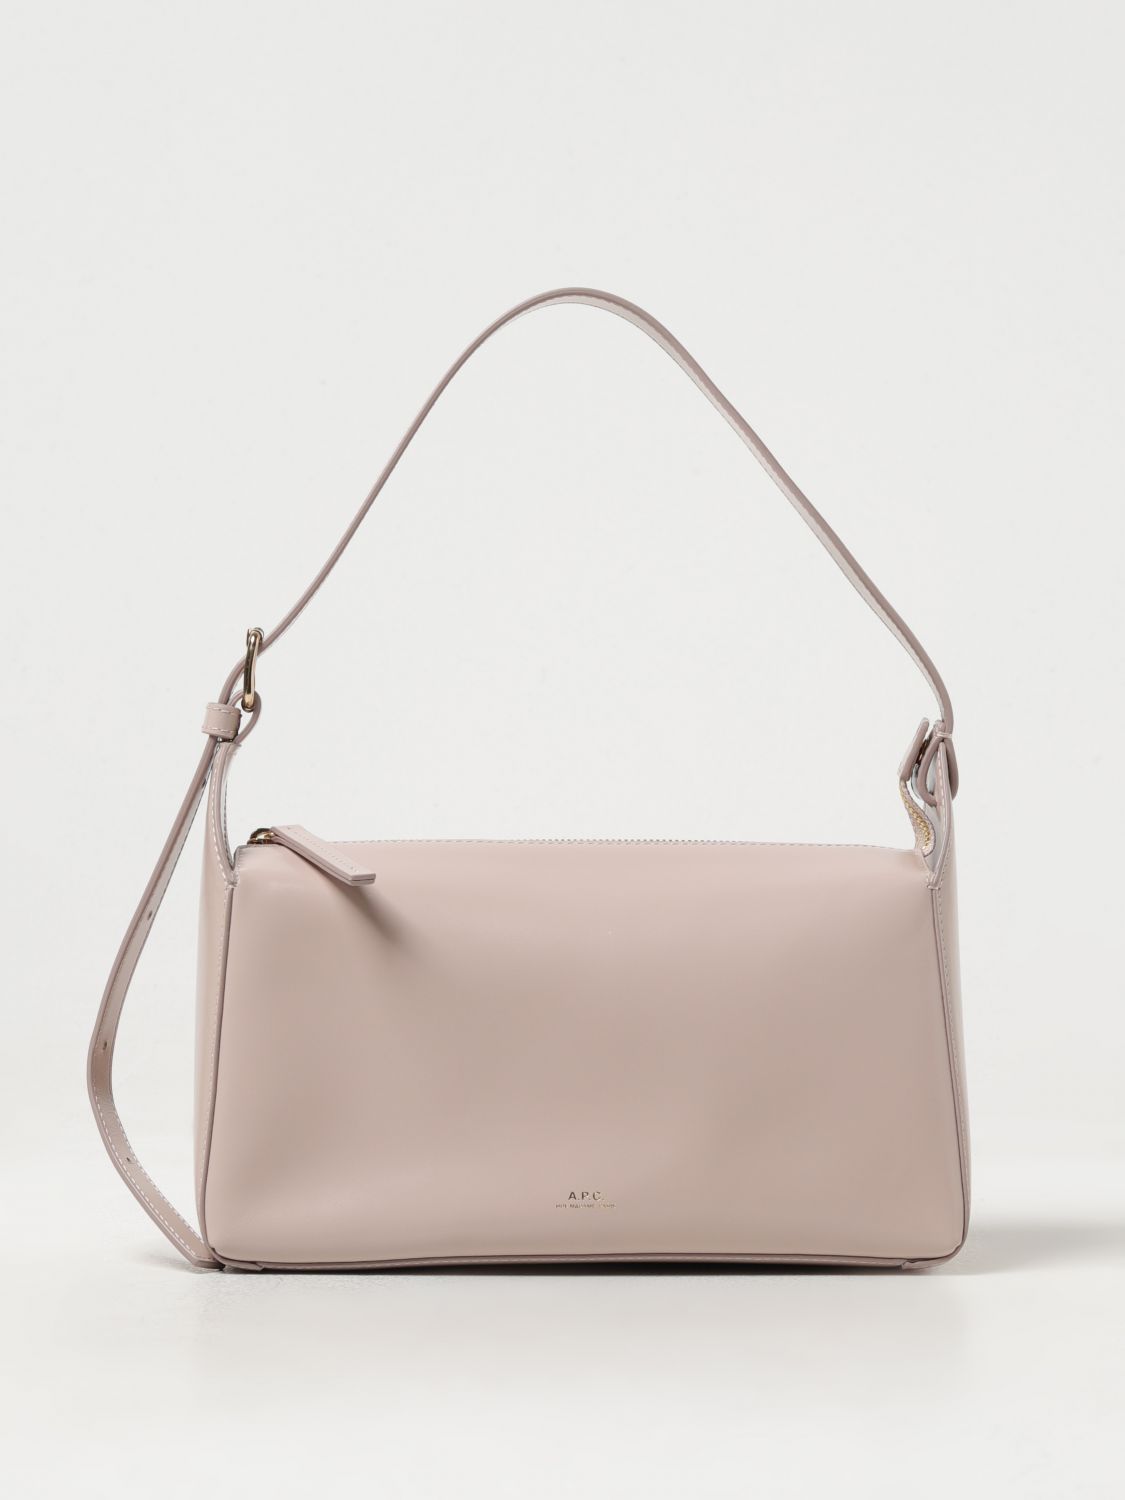 Apc Handbag A.p.c. Woman Color Blush Pink